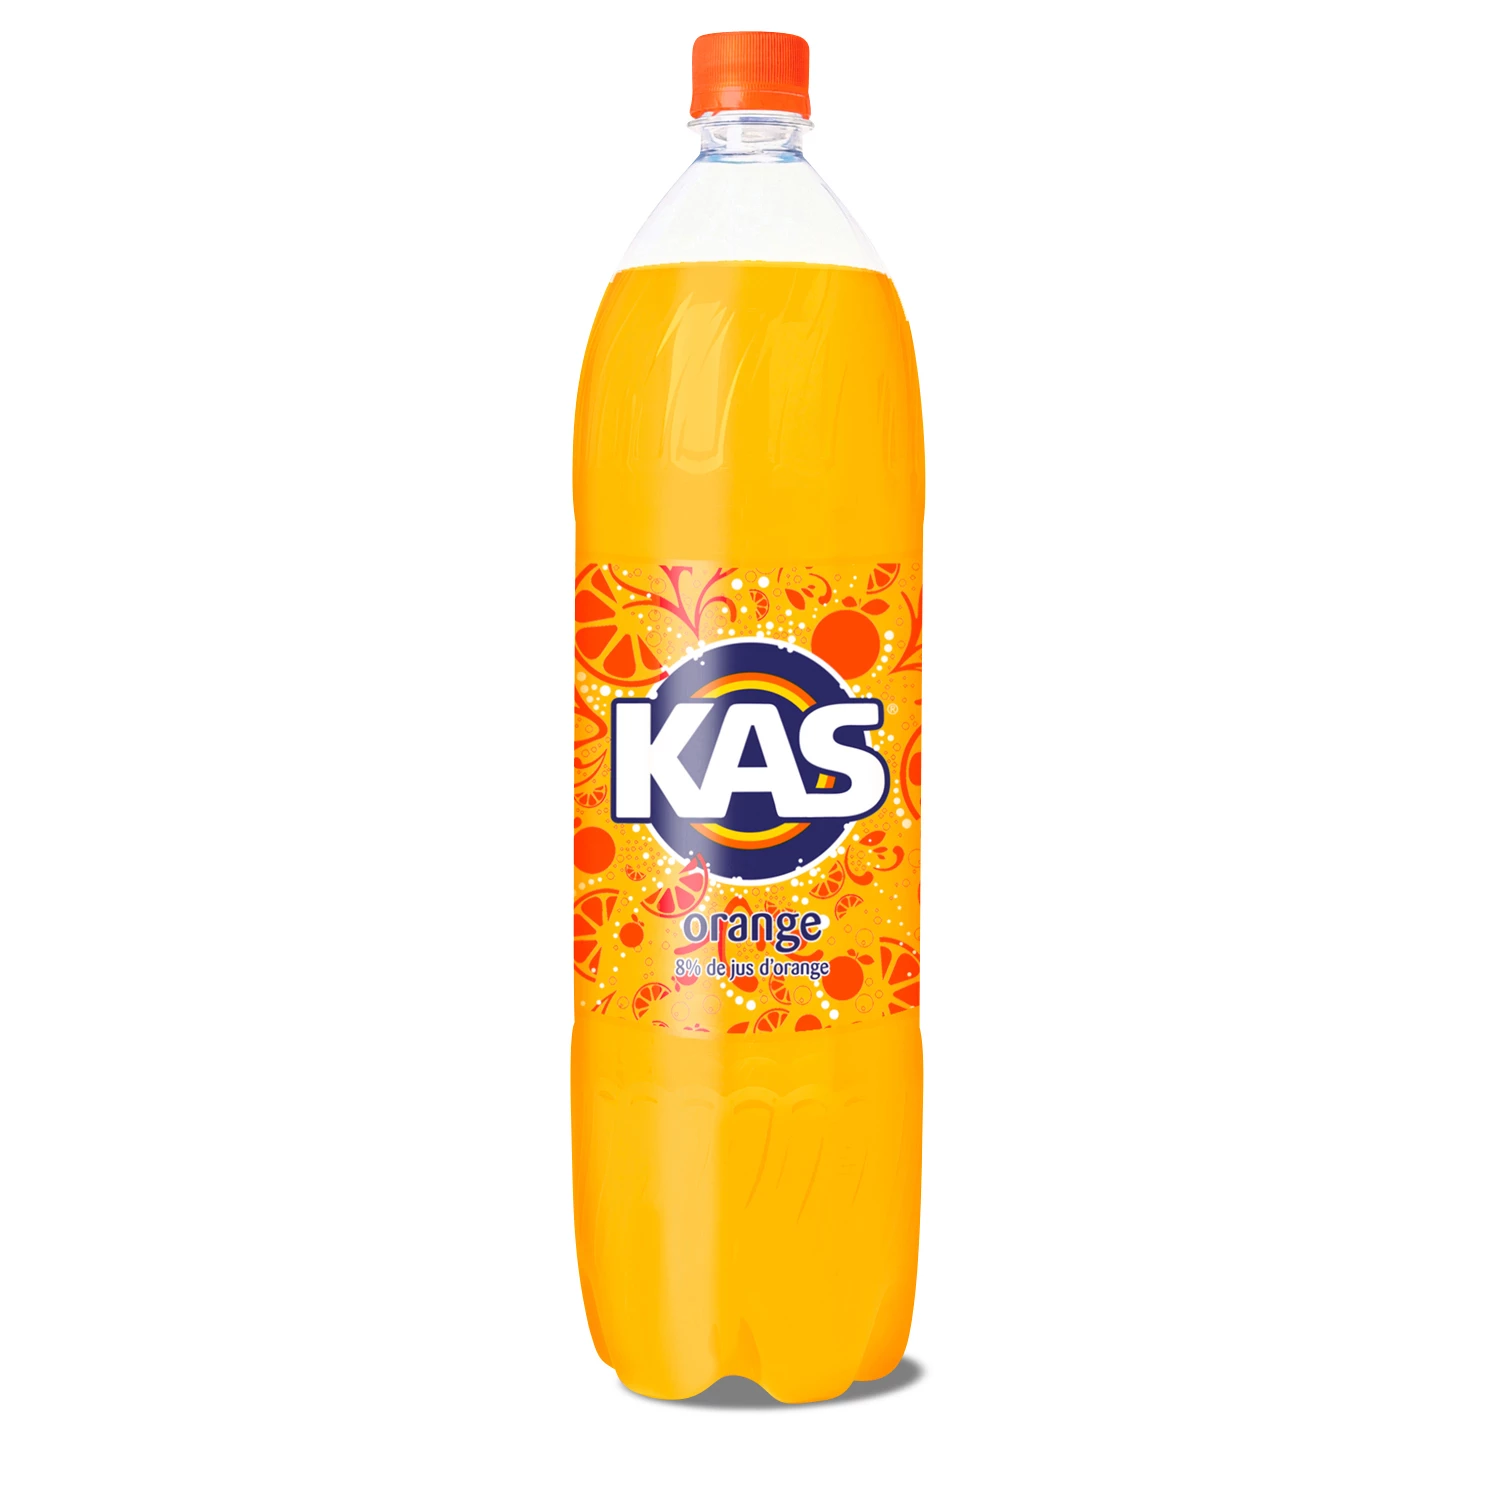 Soda Orange Pet 1.5l X6 - Kas